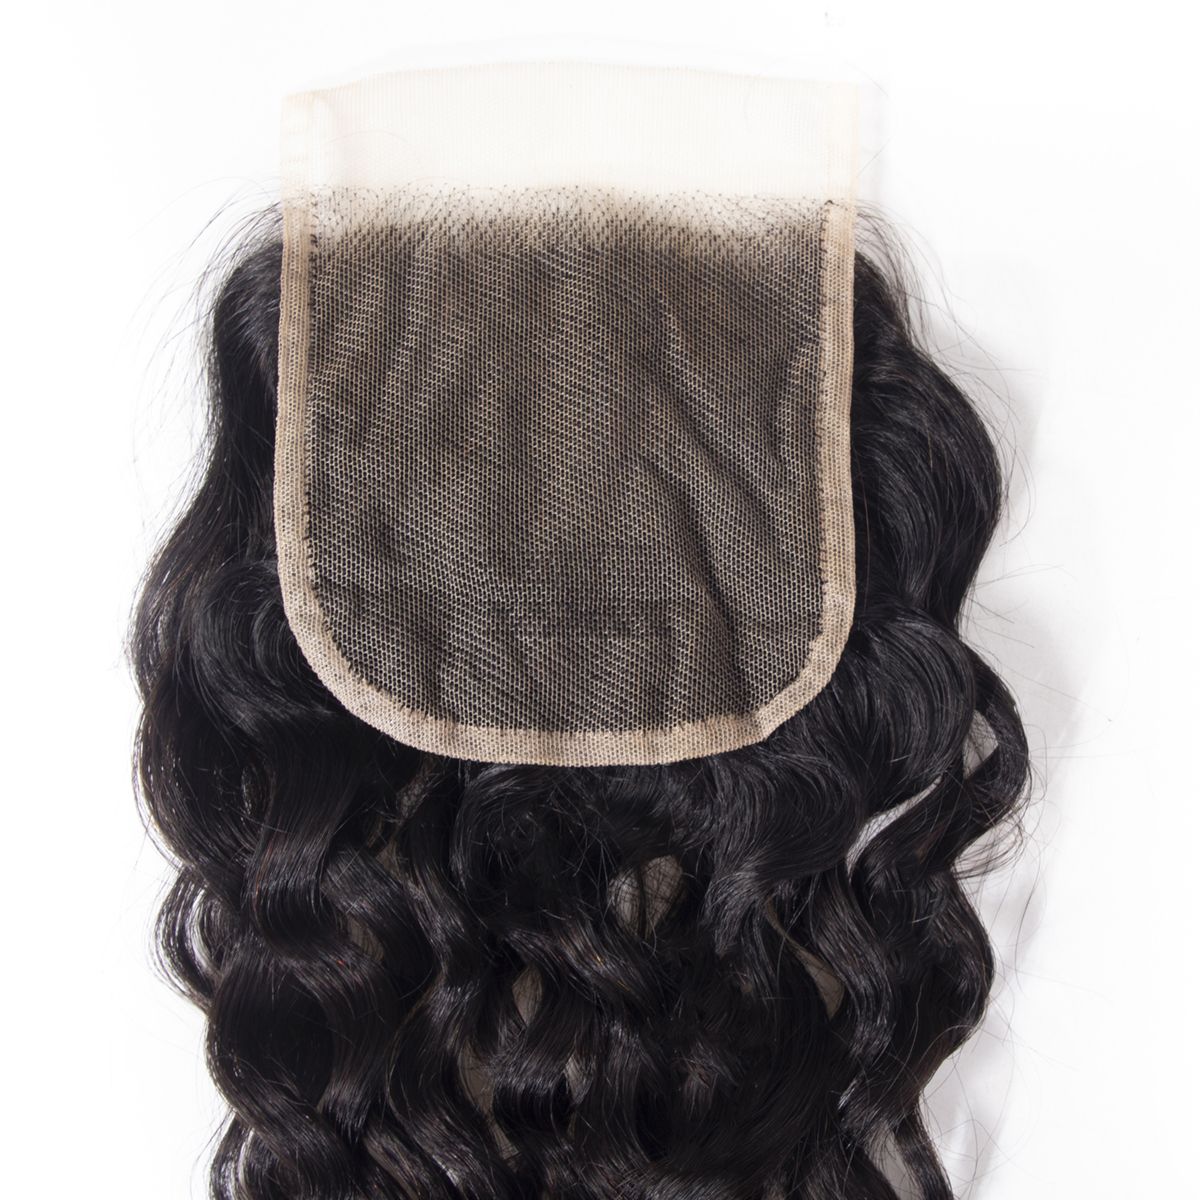 Tinashe hair water wave transparent lace closure